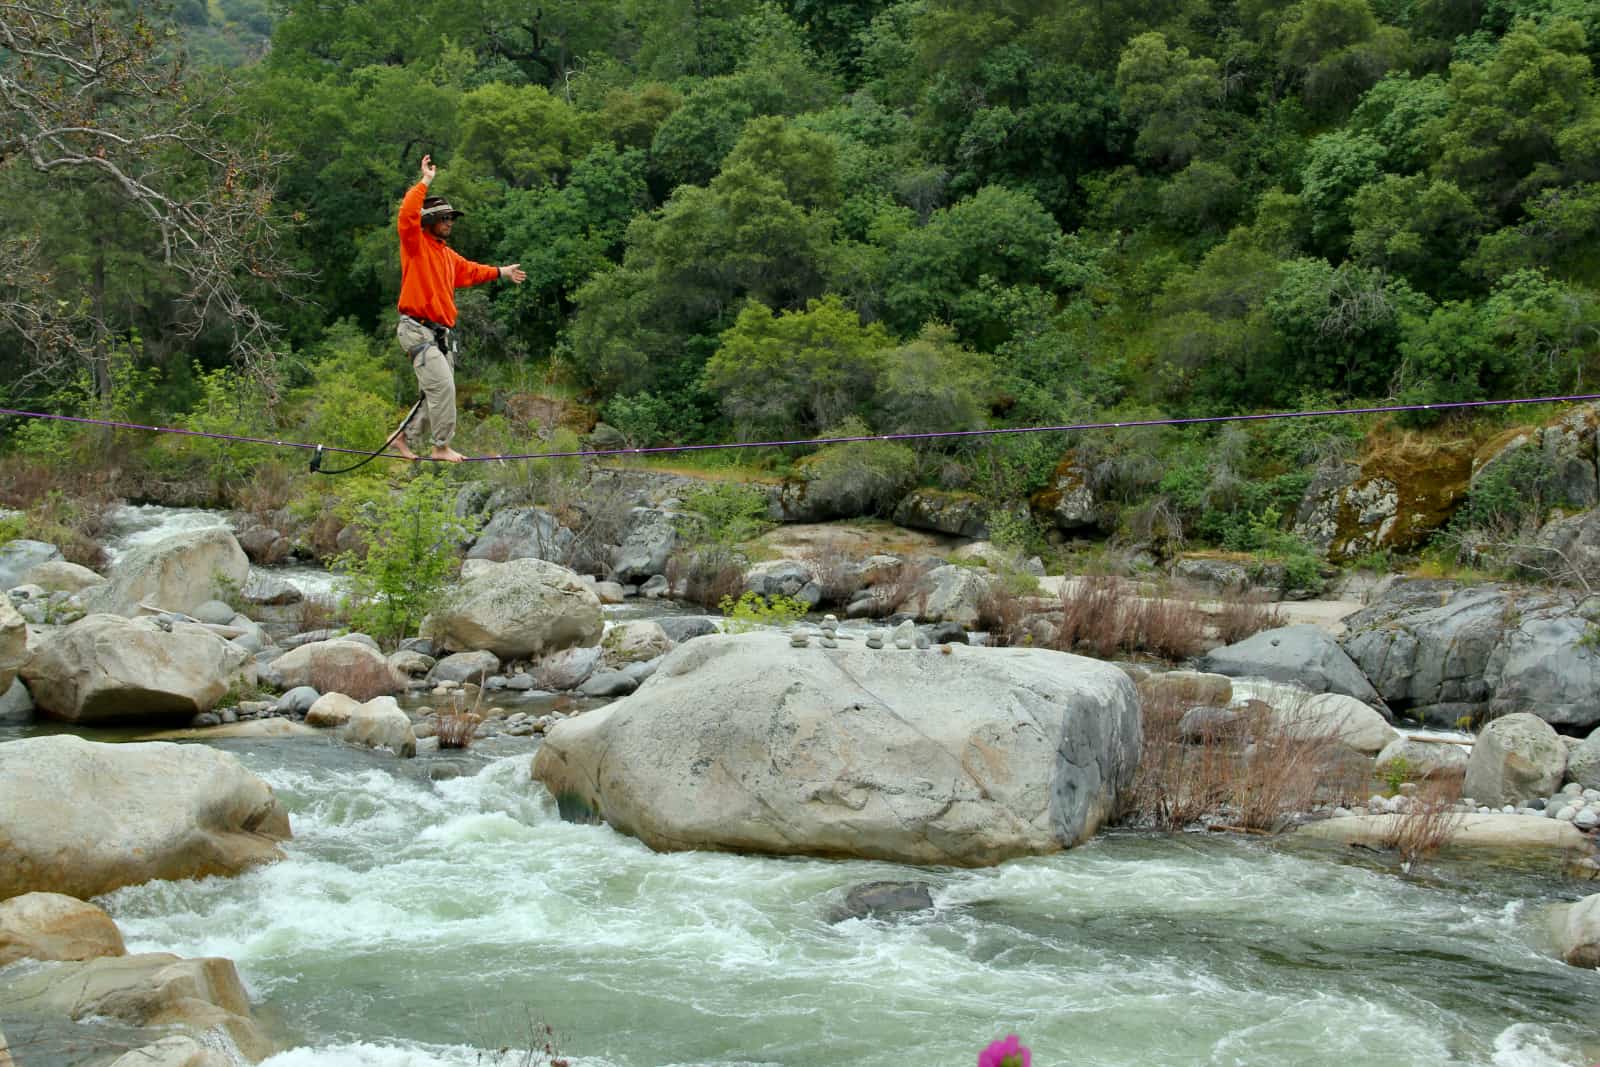 Man in orange sweater walking along rope over river